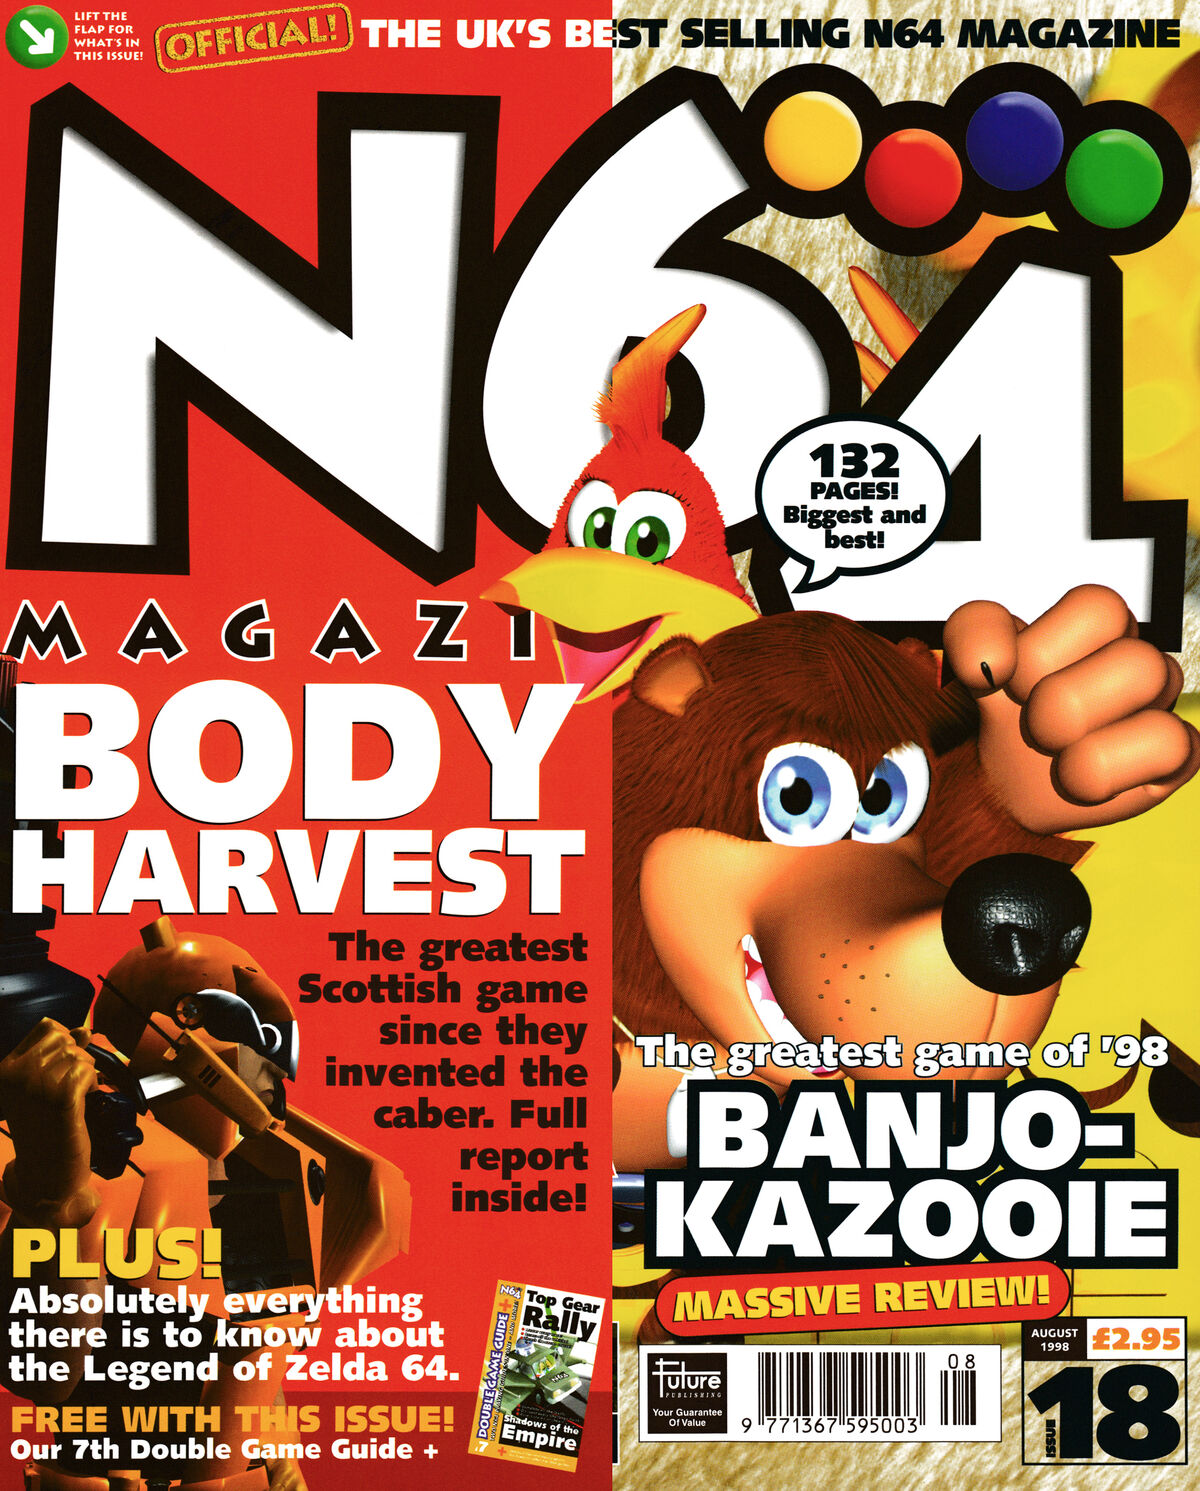 Revista Nintendo World número 27. 007, Legend of Zelda, Banjo